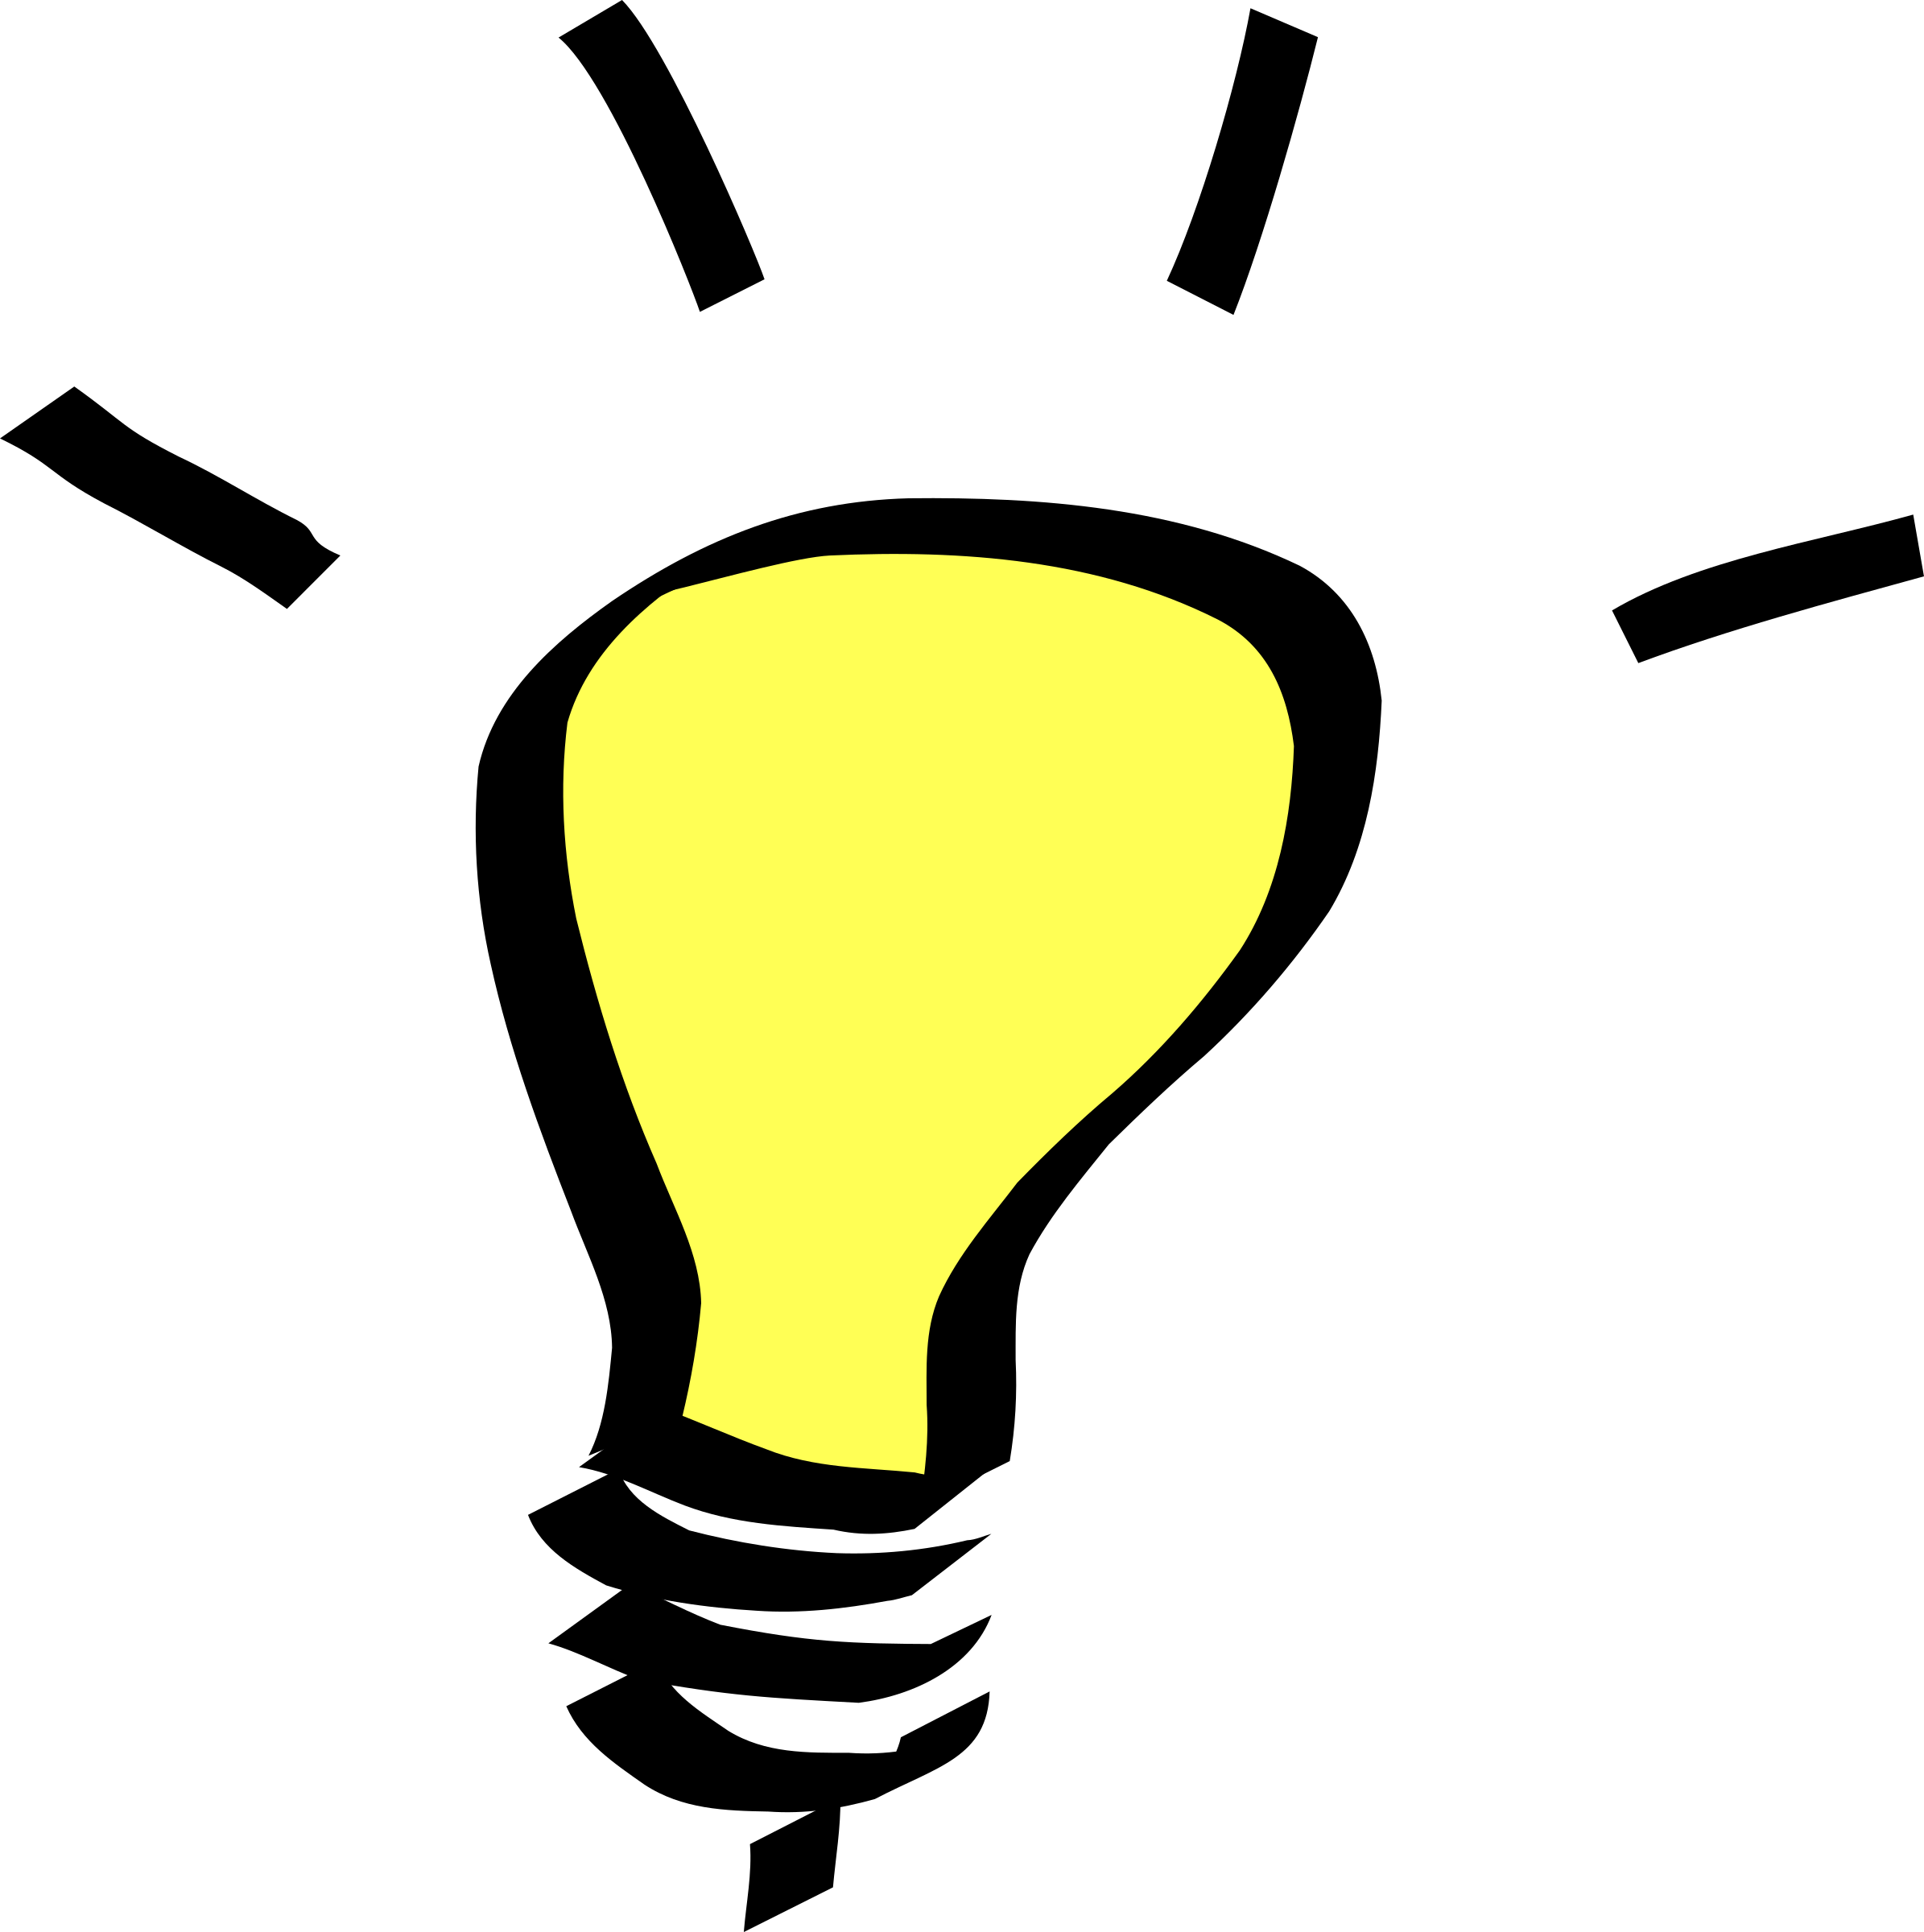 Warning light download flashing. Lighthouse clipart yellow